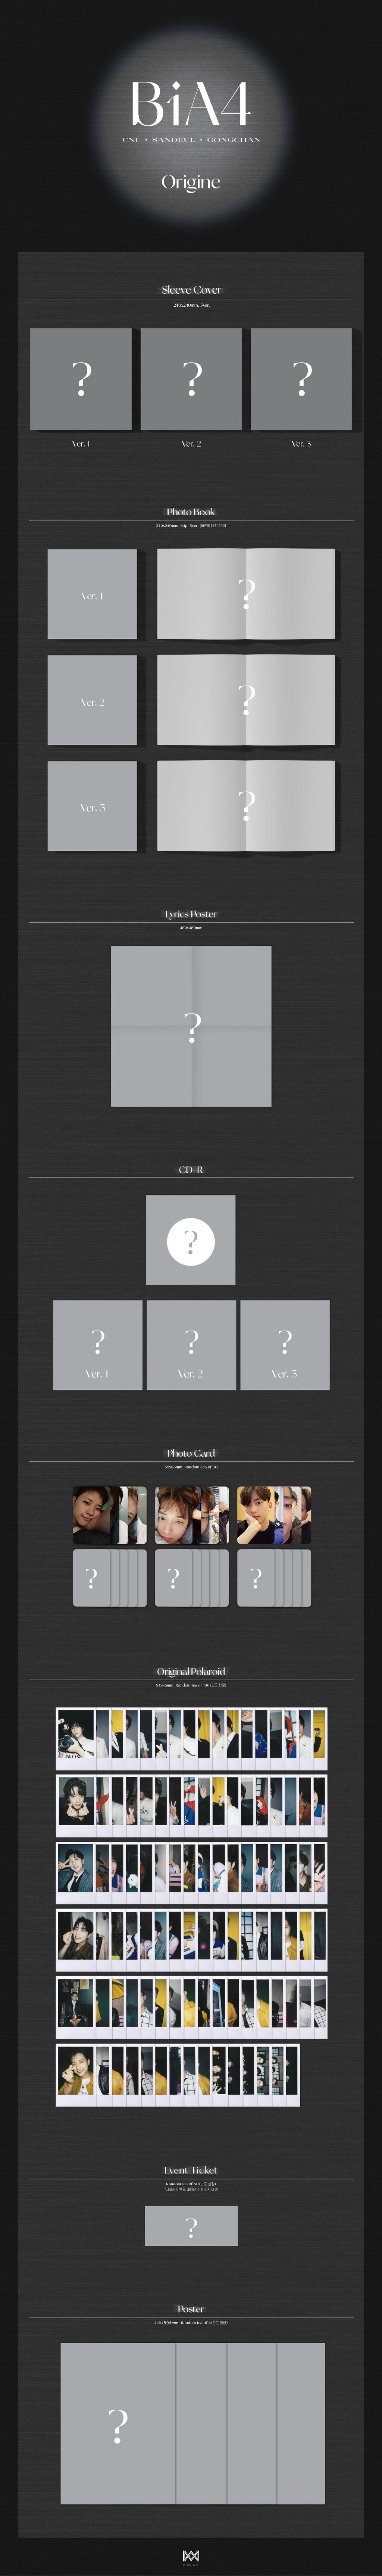 B1A4 4th Album [Origine] 예약 판매 안내 [Coming Soon 2020. 10. 19]